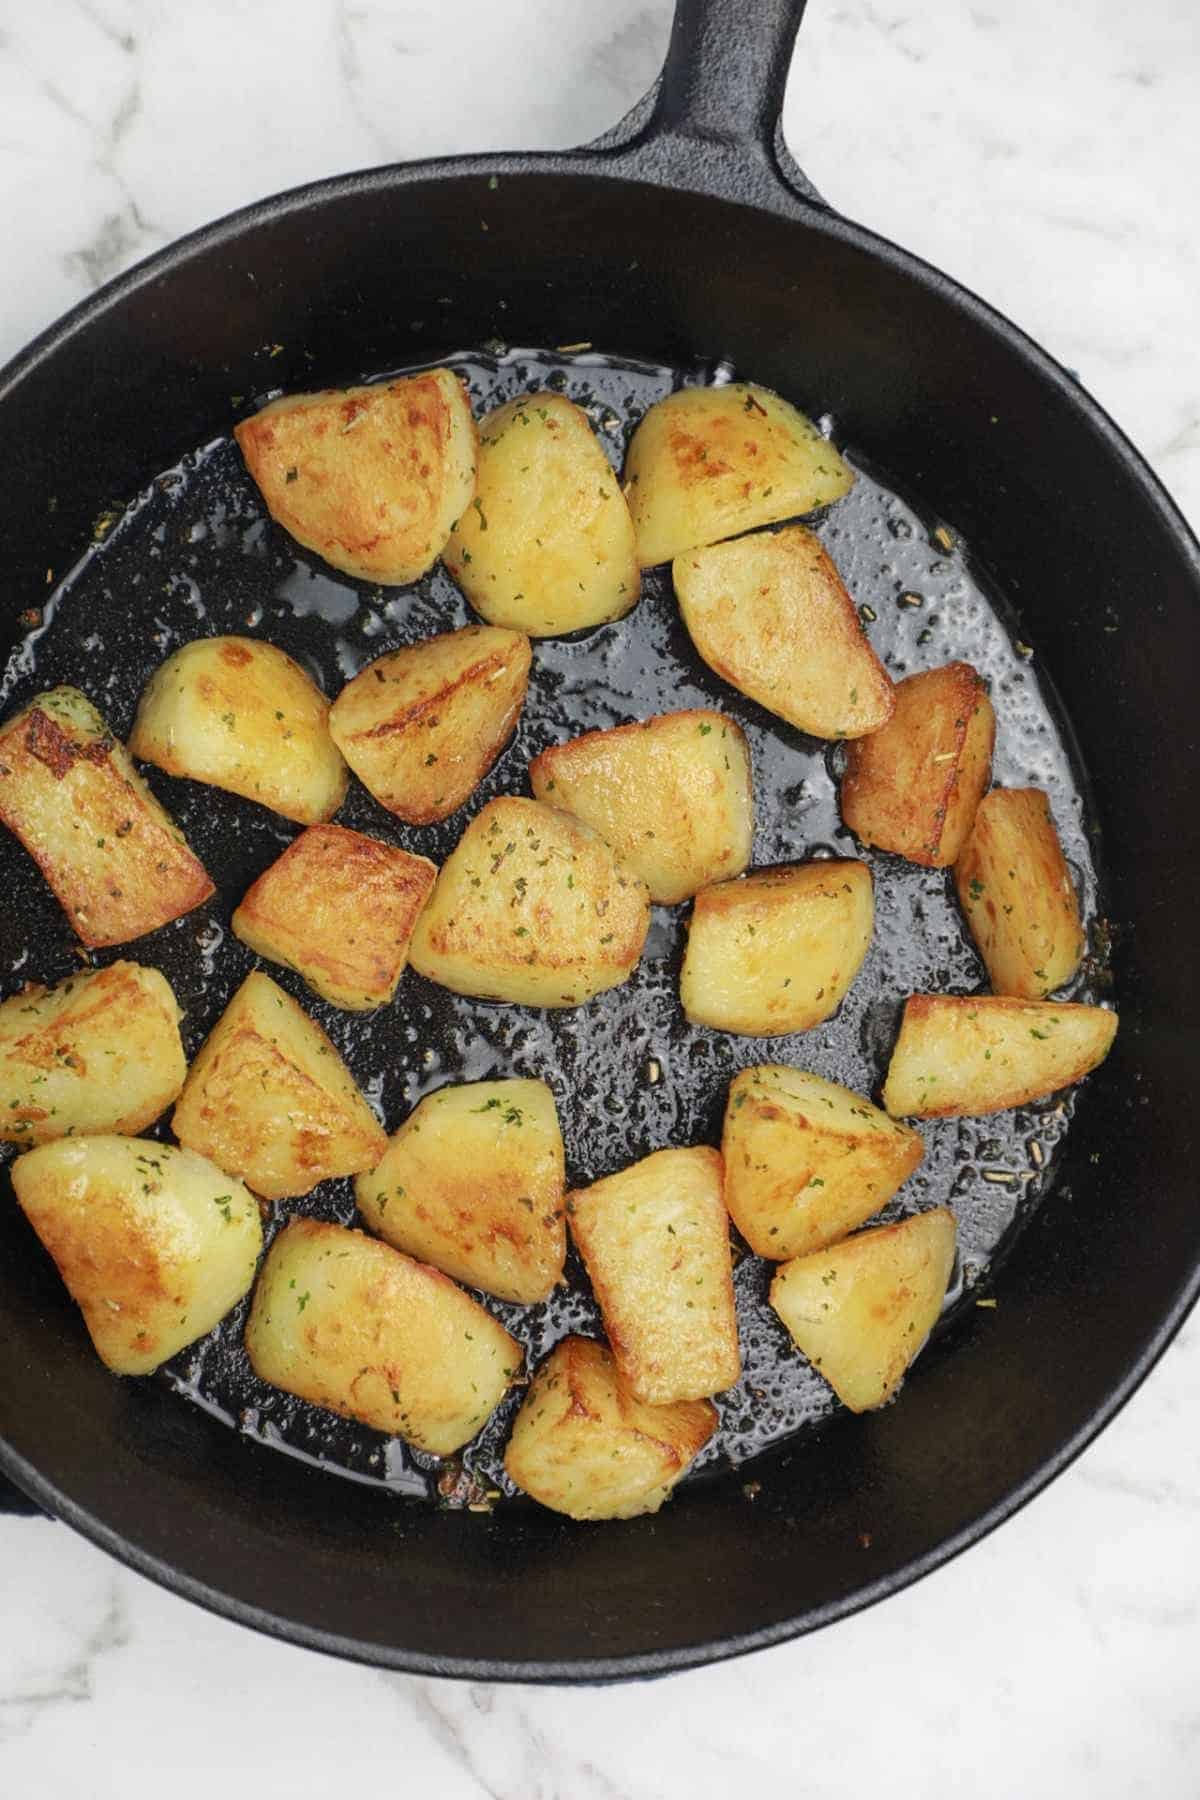 fries in the pan.